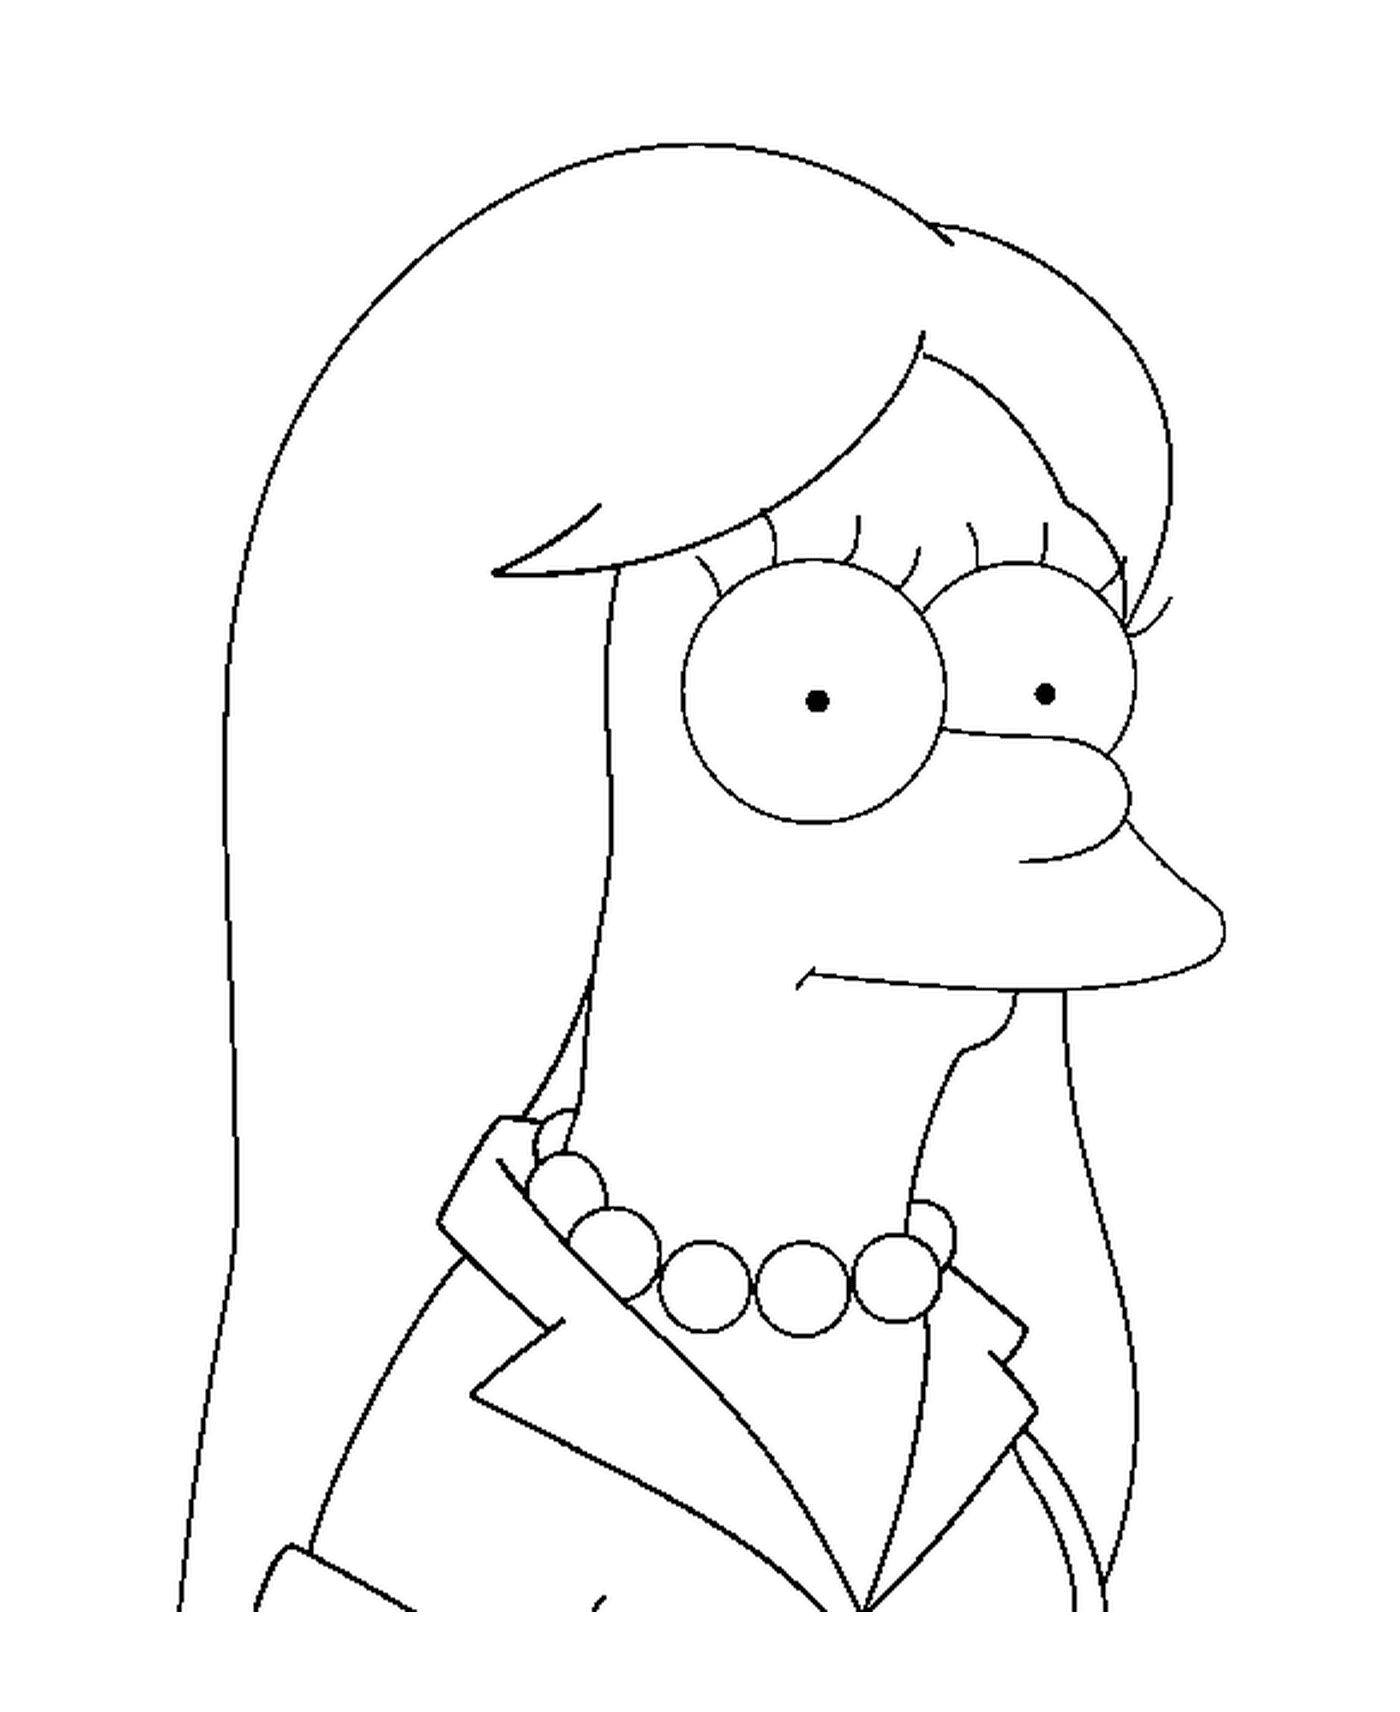  Мардж Симпсон плоские волосы 